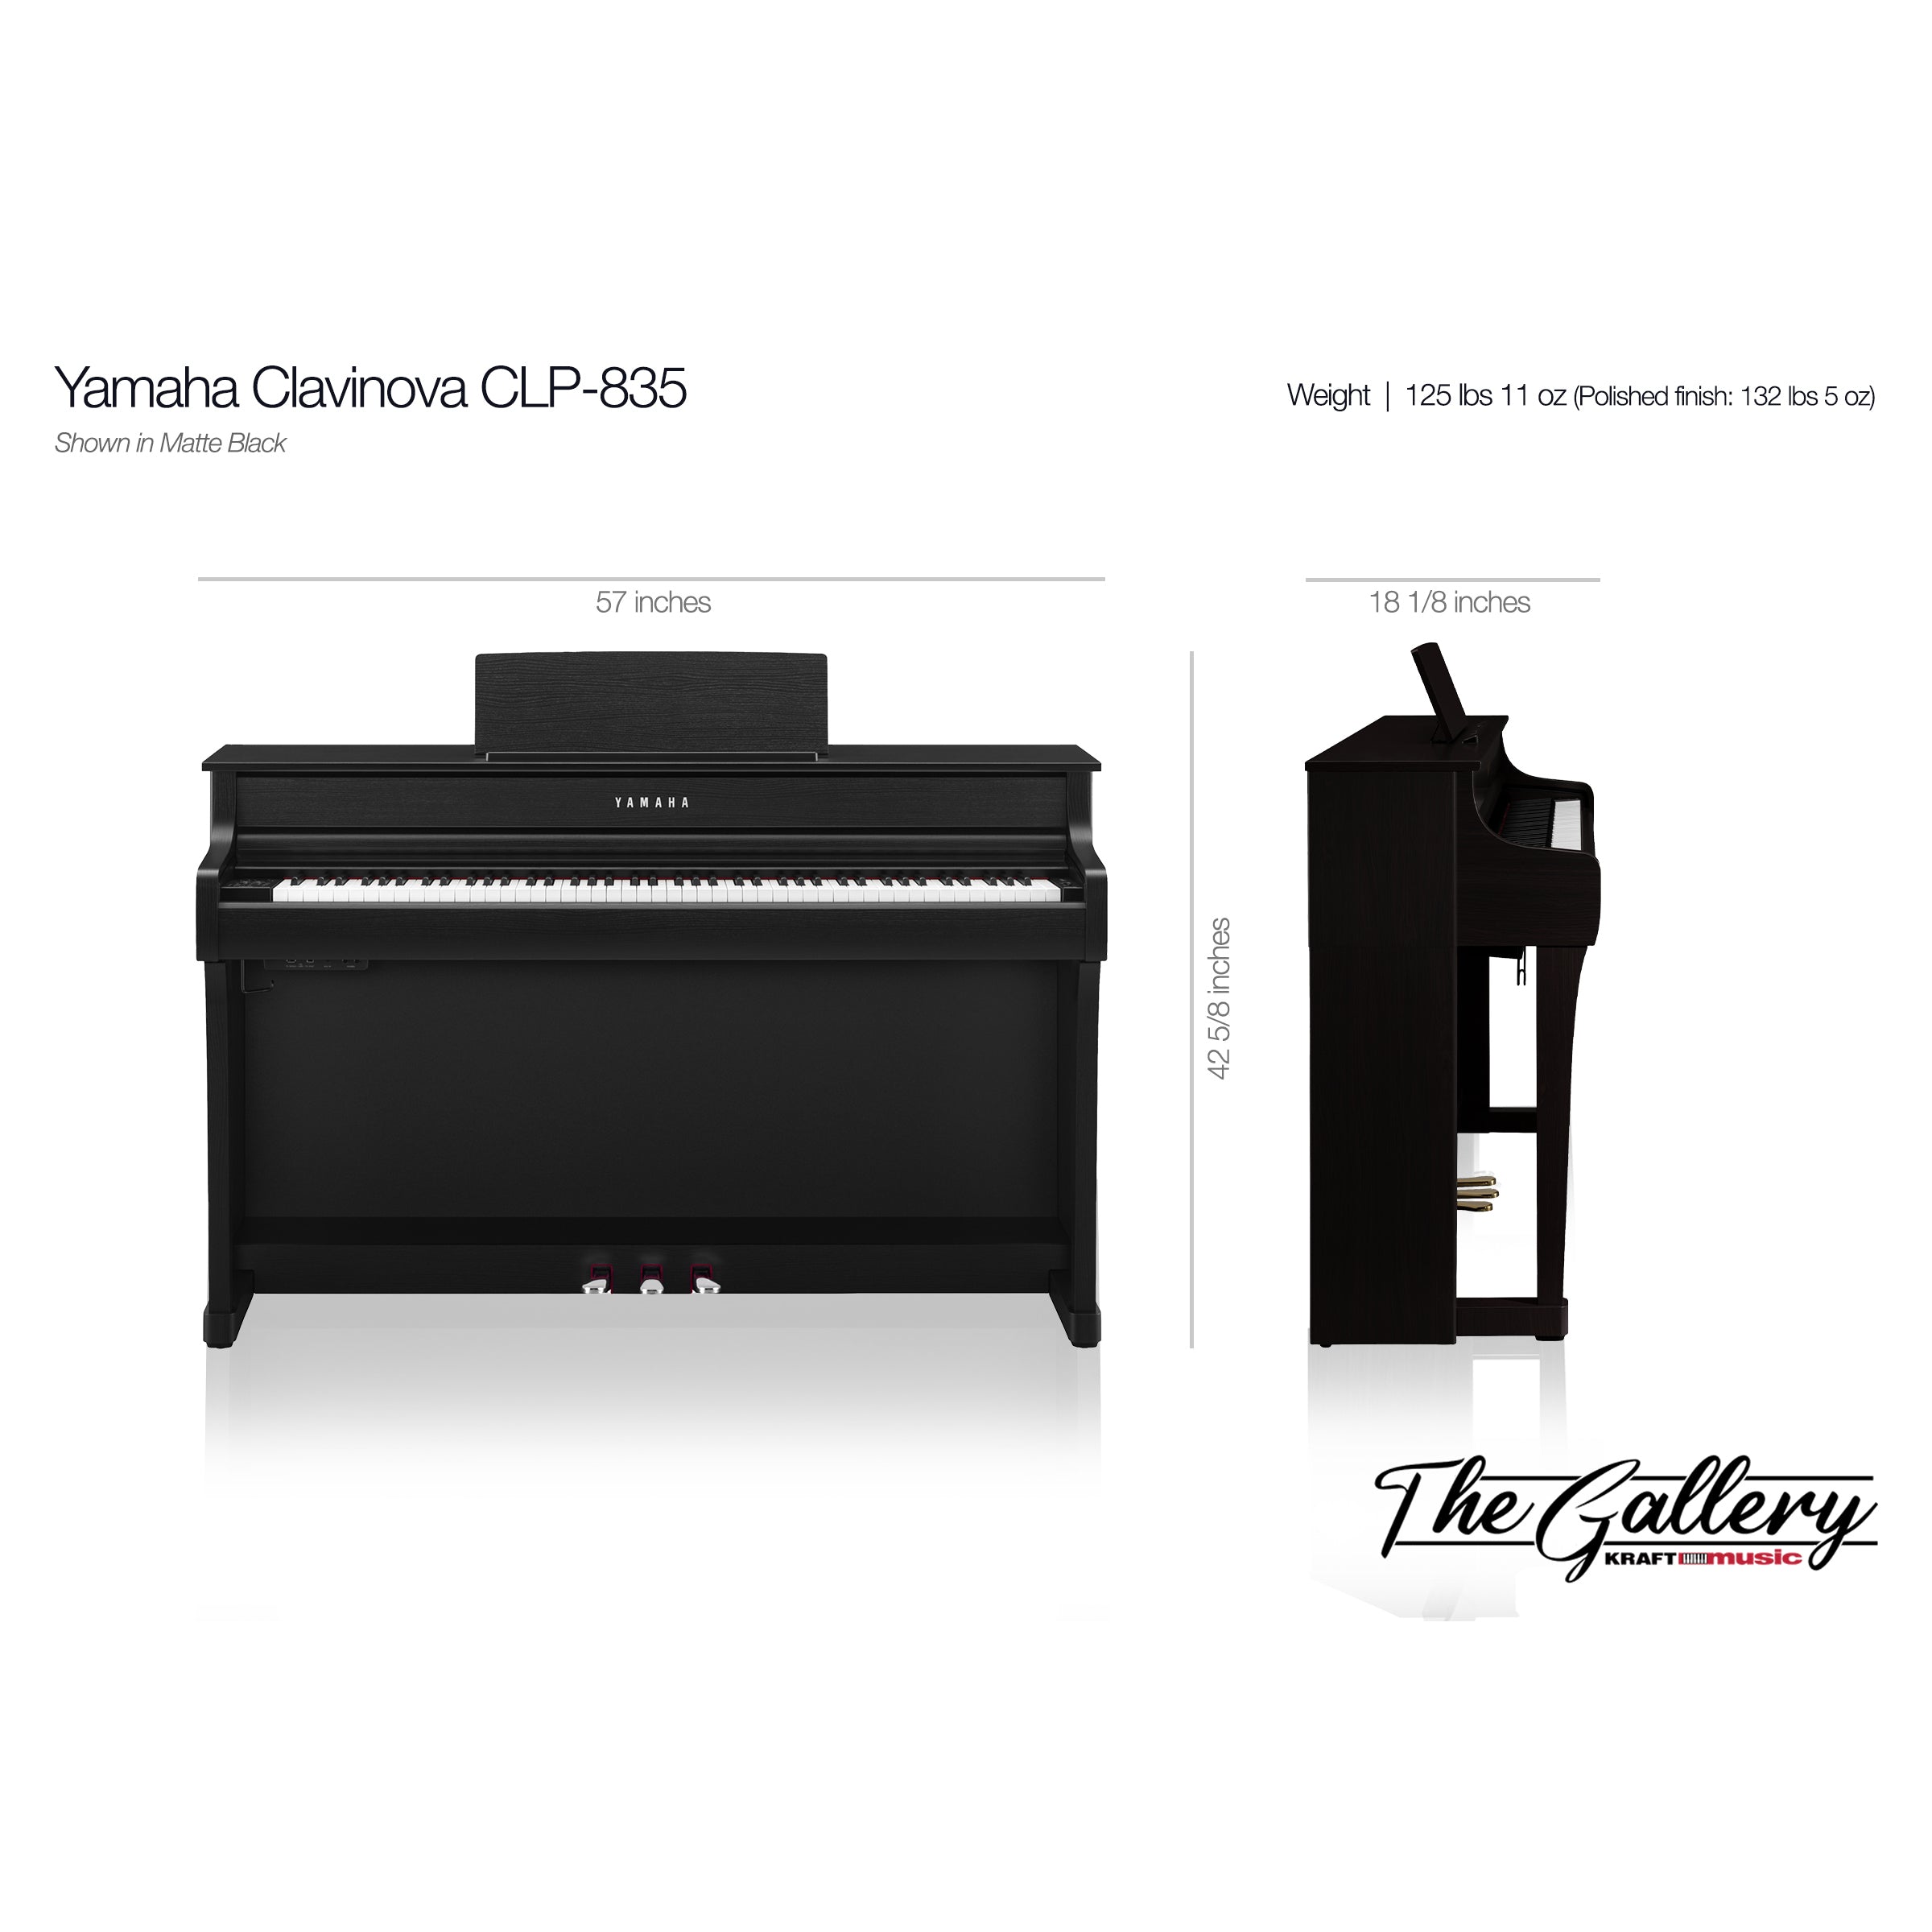 Yamaha Clavinova CLP-835 Digital Piano - Dimensions